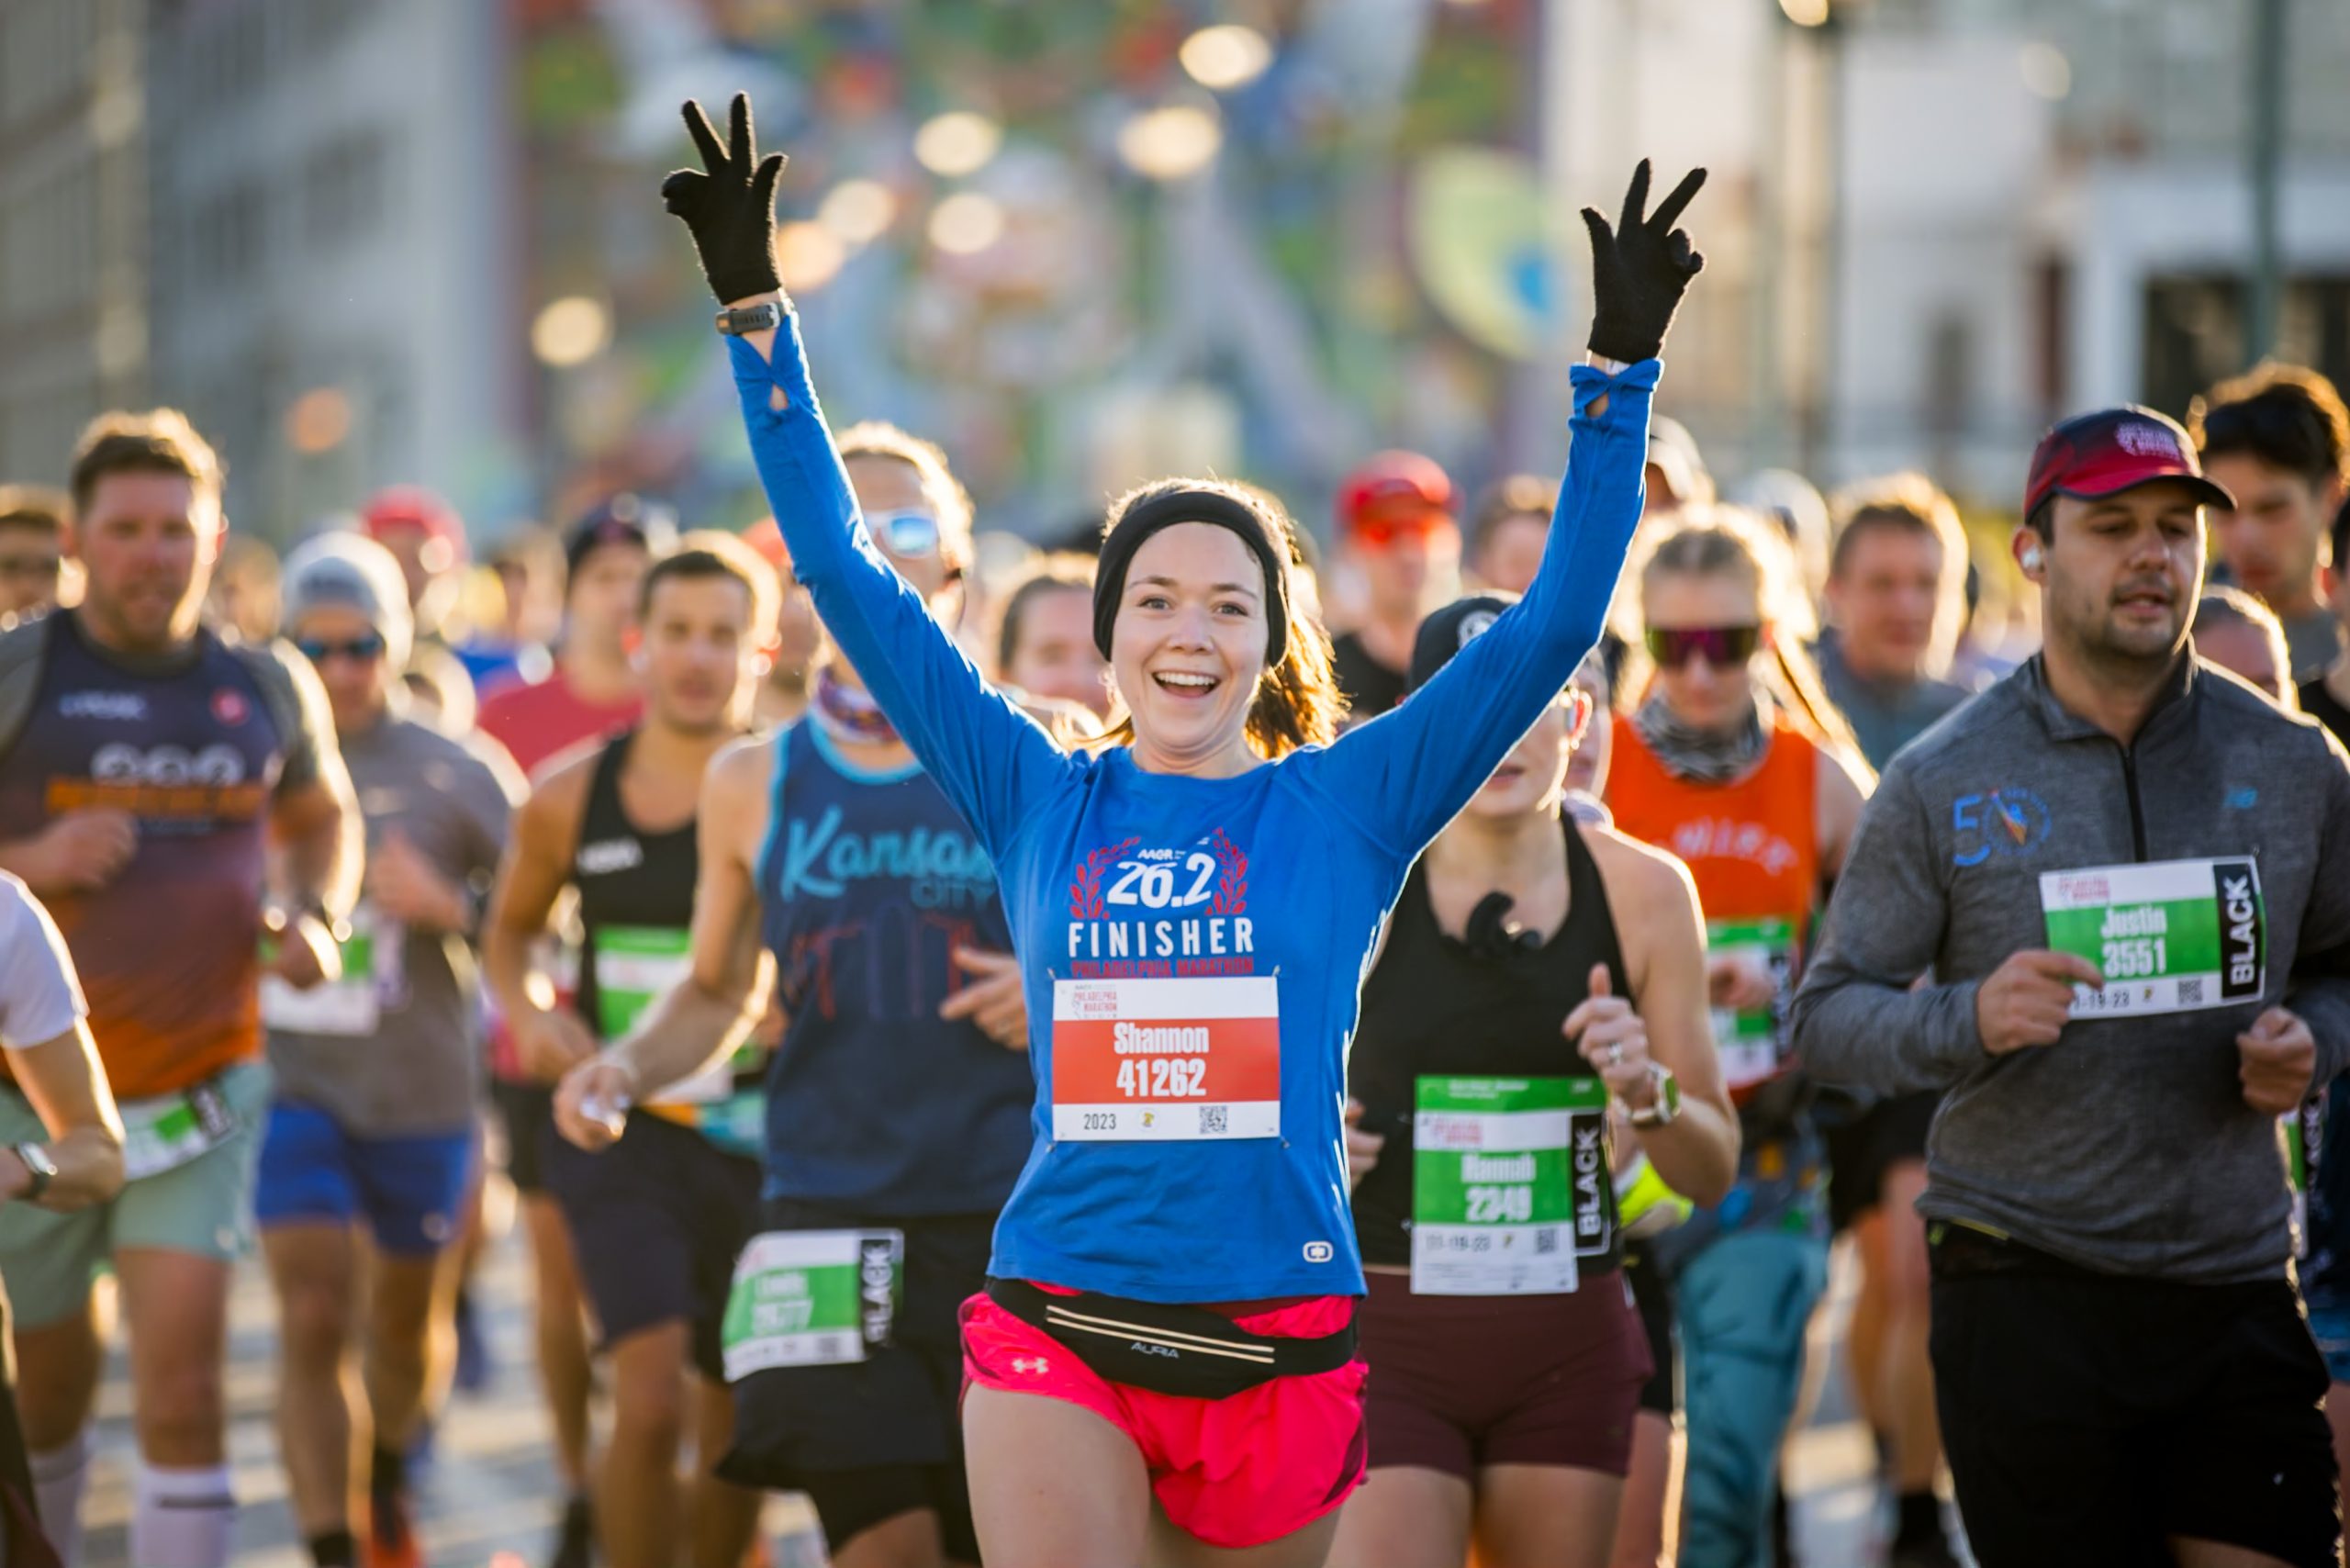 A runner triumphantly throws their hands in the air as they run in the Philadelphia Marathon